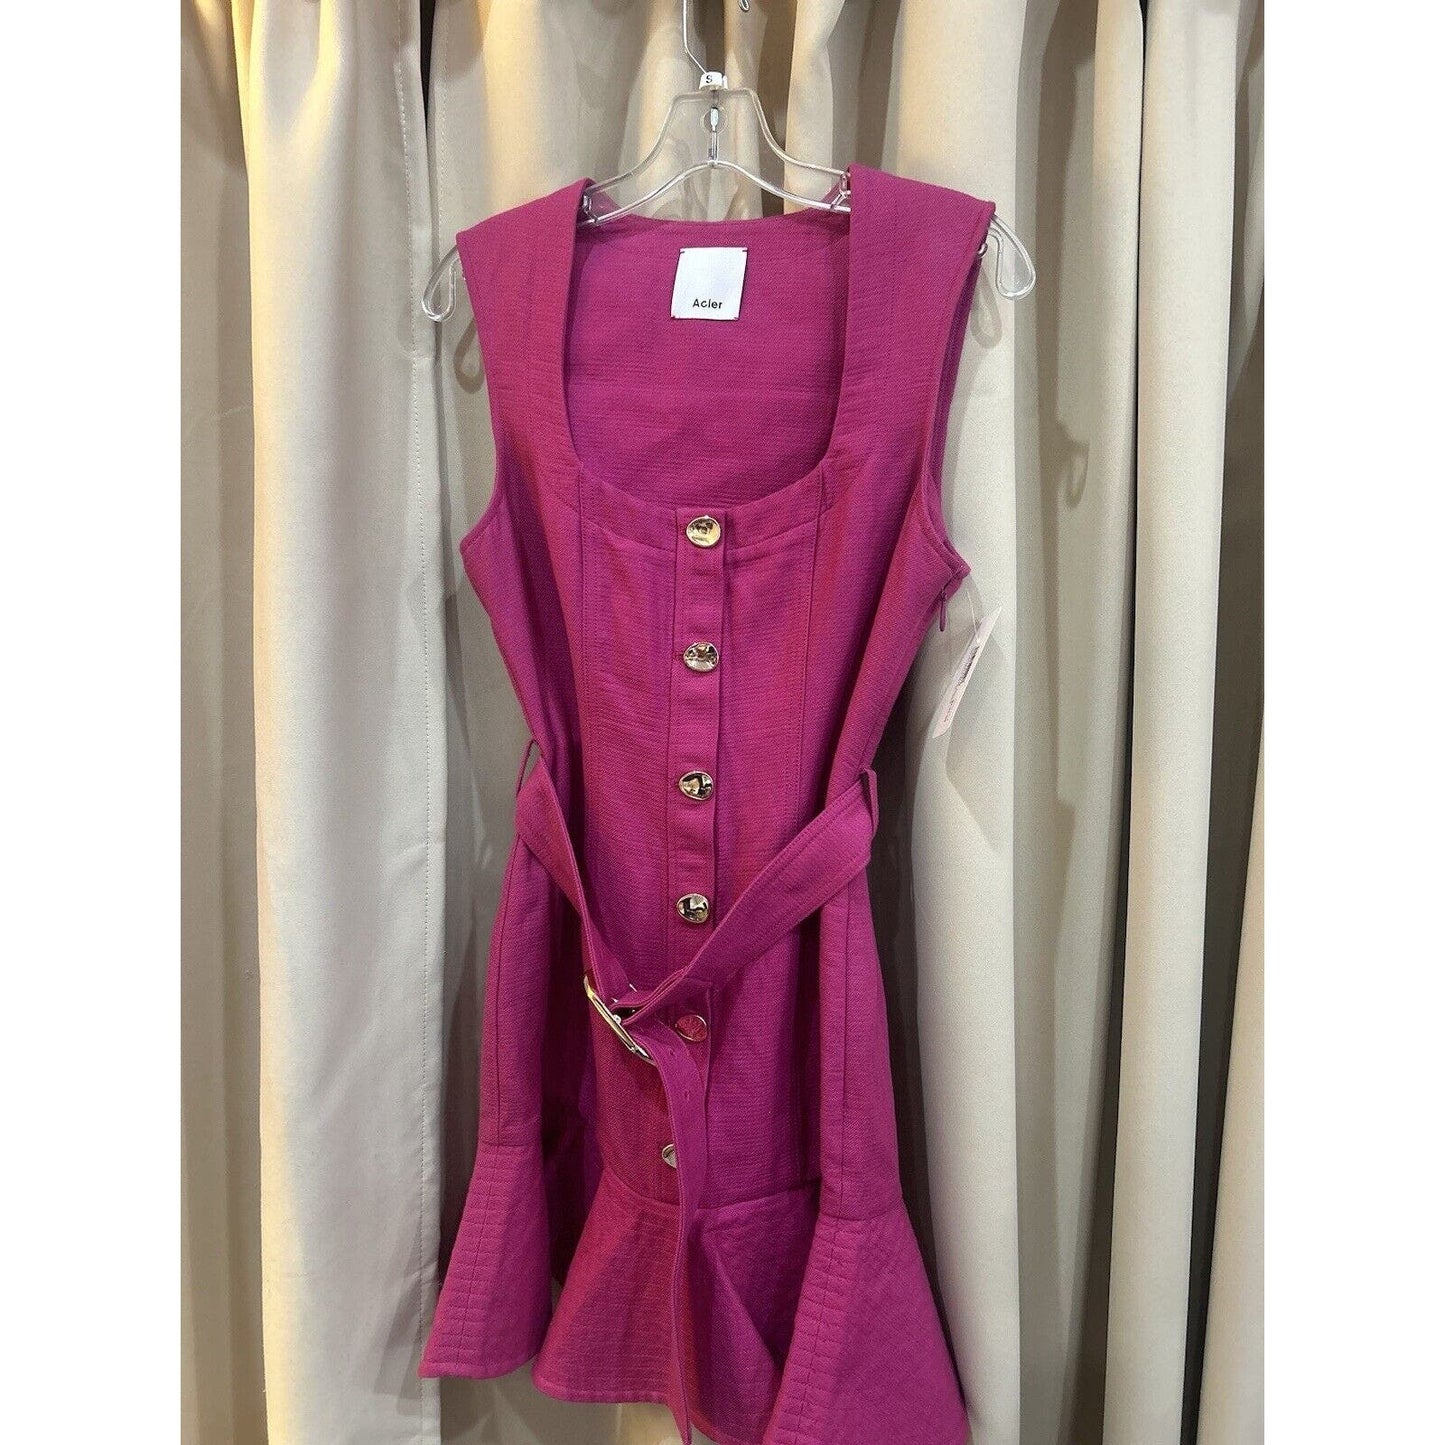 Acler Finsbury Ruffle-Hem Dress size 6 NWT